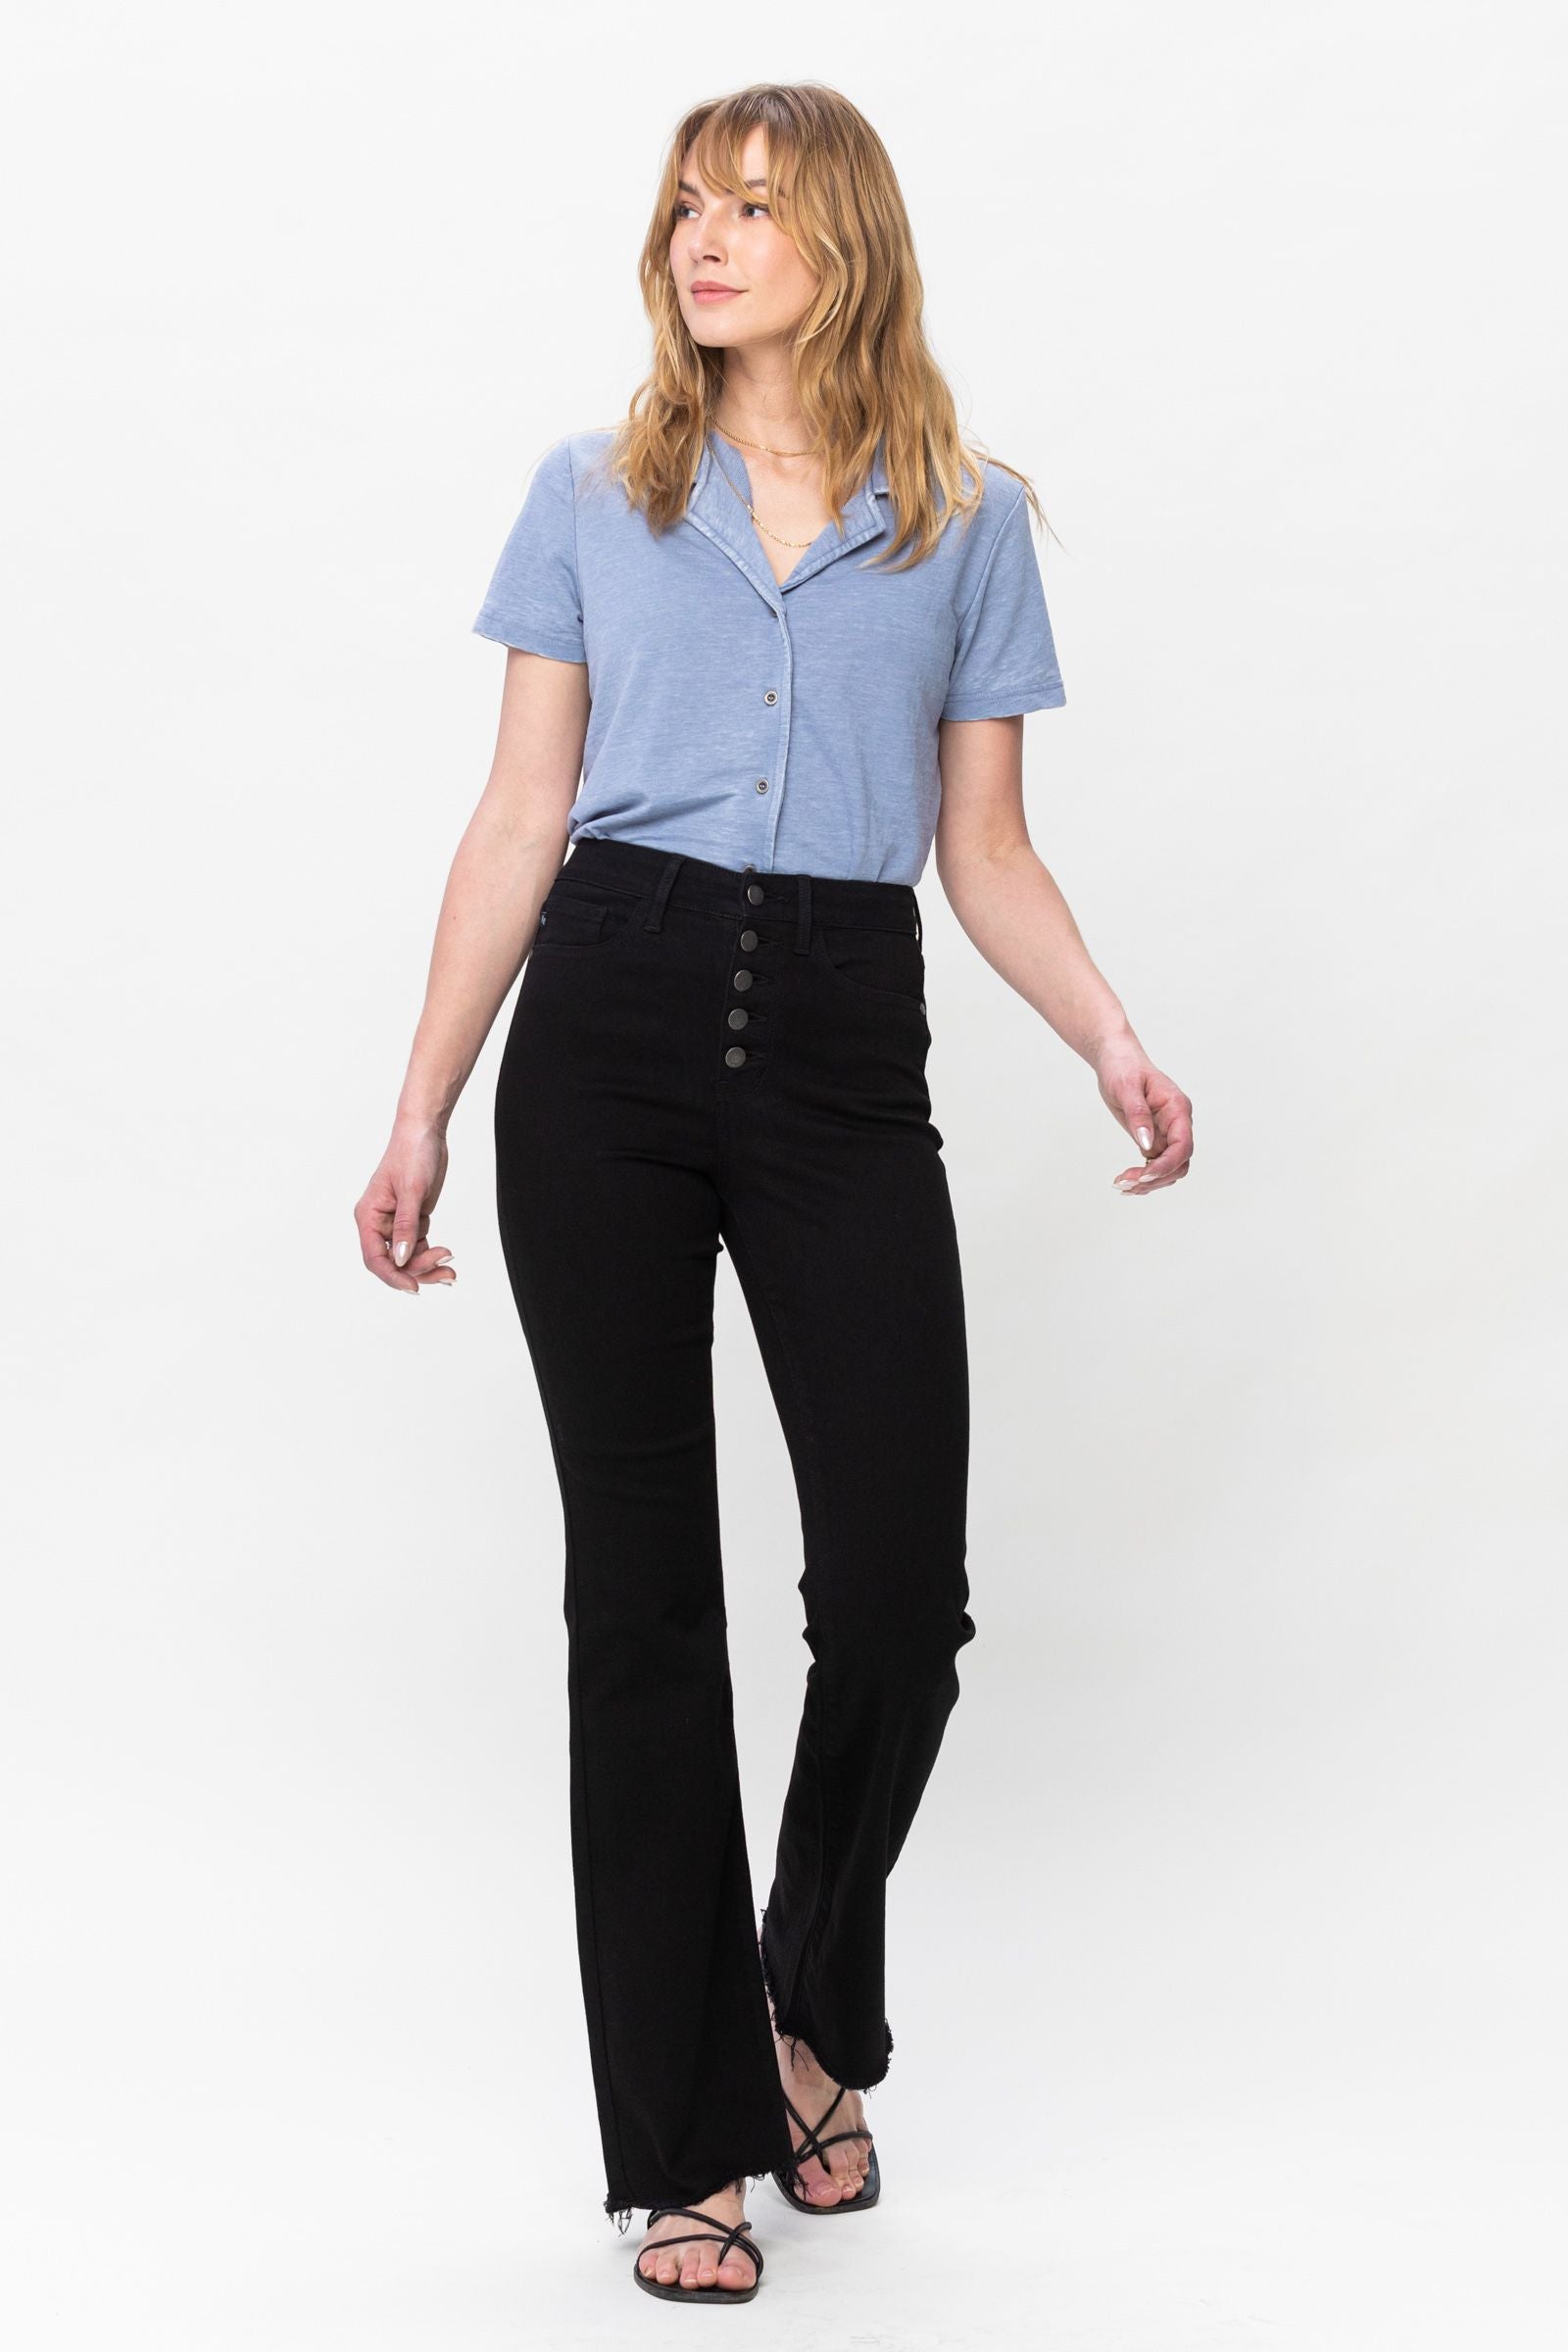 Judy Blue® RACHEL Jeans